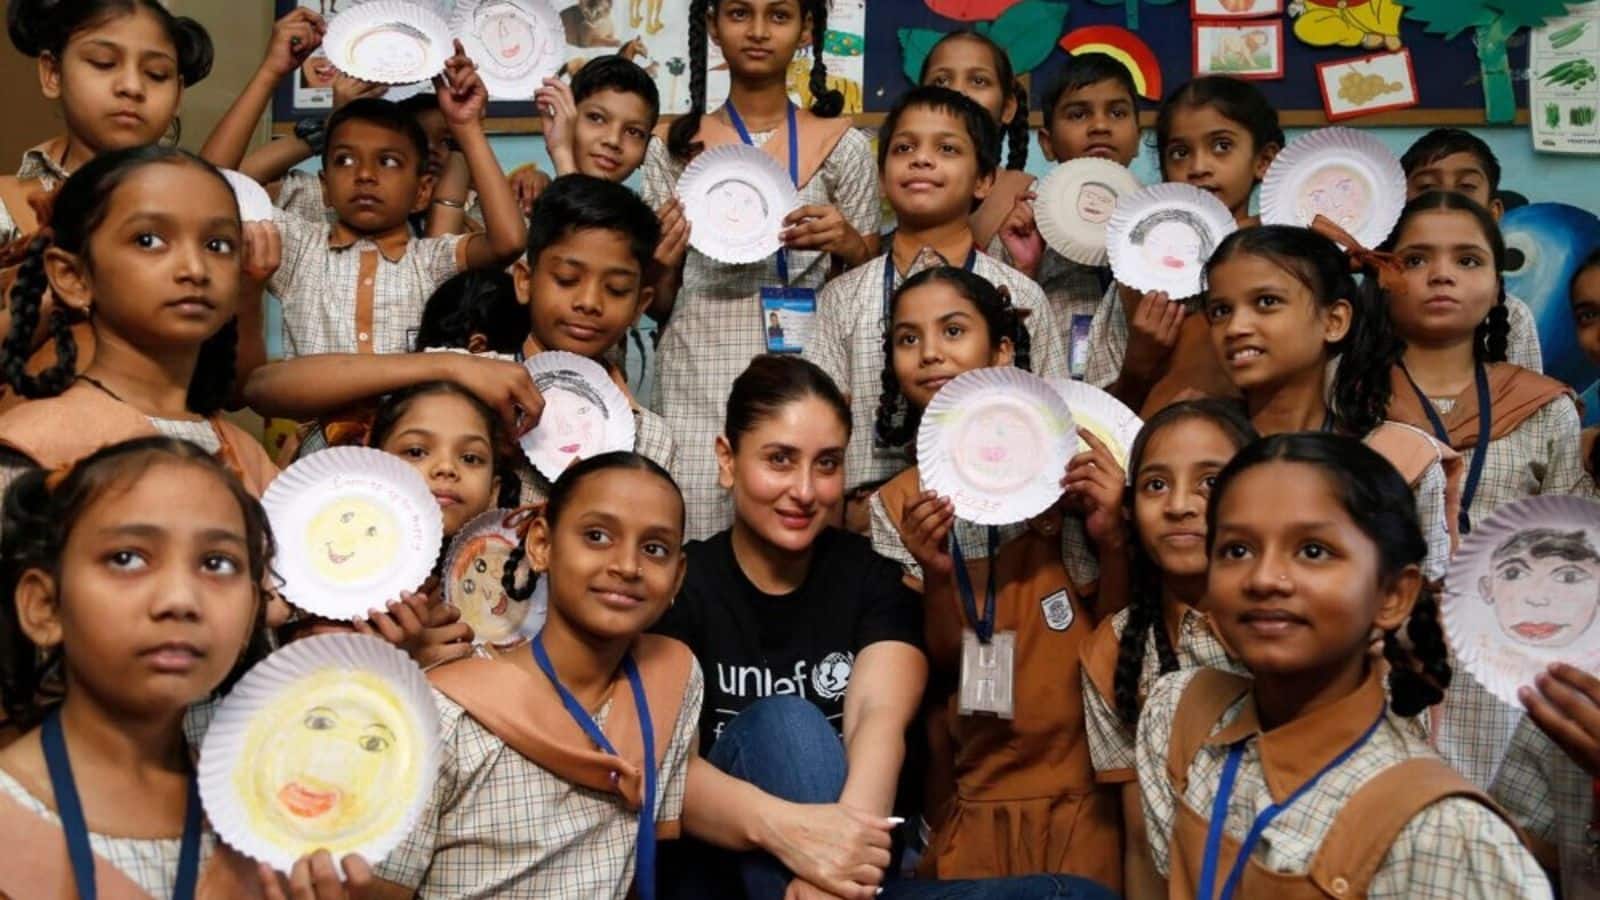 UNICEF India appoints Kareena Kapoor Khan as National Ambassador